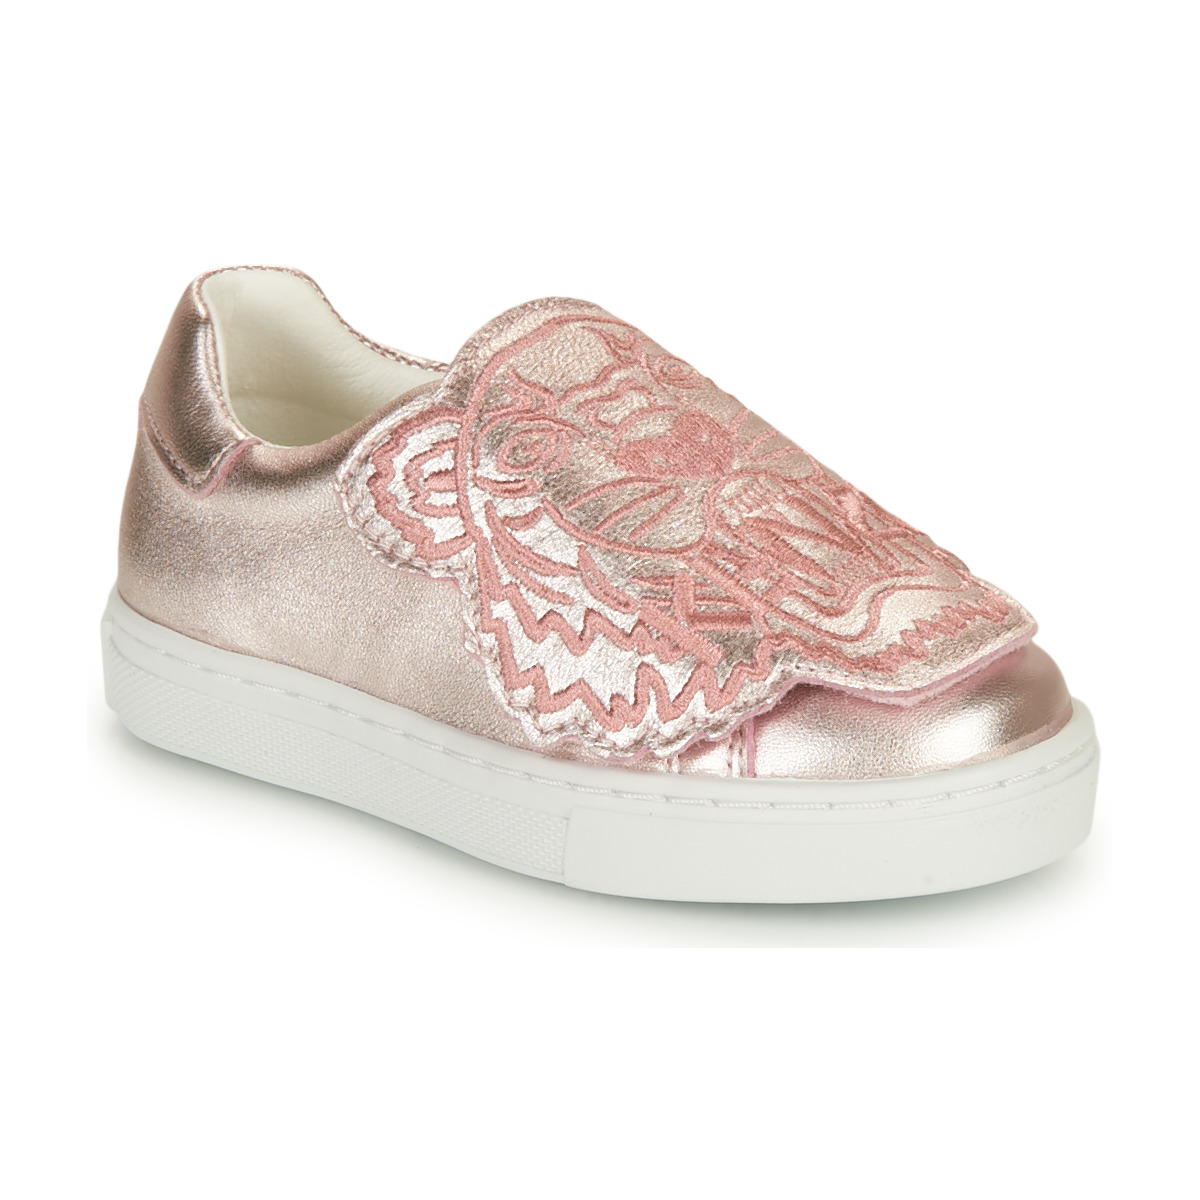 Shoes Girl Slip-ons Kenzo K19113 Pink